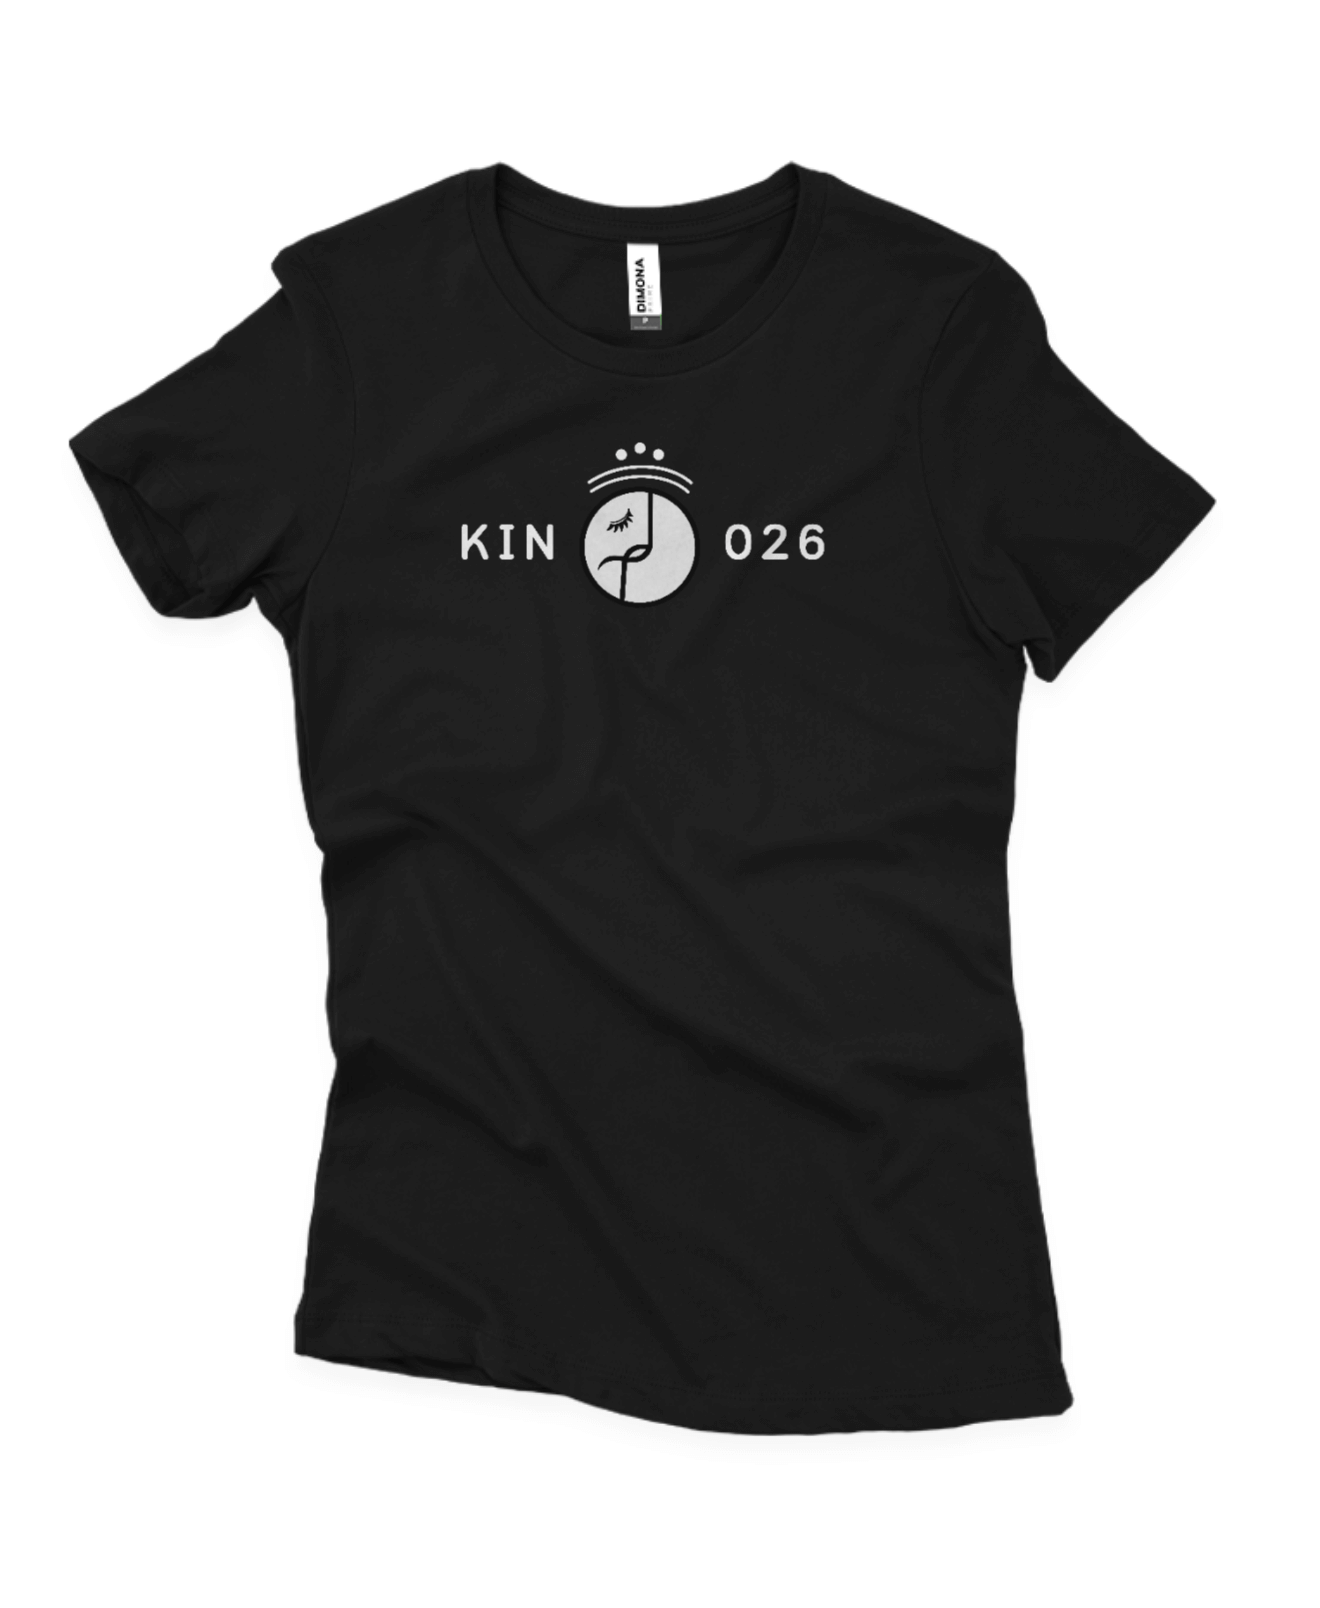 Mockup Camisa Preta - Camisa Feminina Kin 026 - Enlaçador de Mundos Cósmico - Kin 26